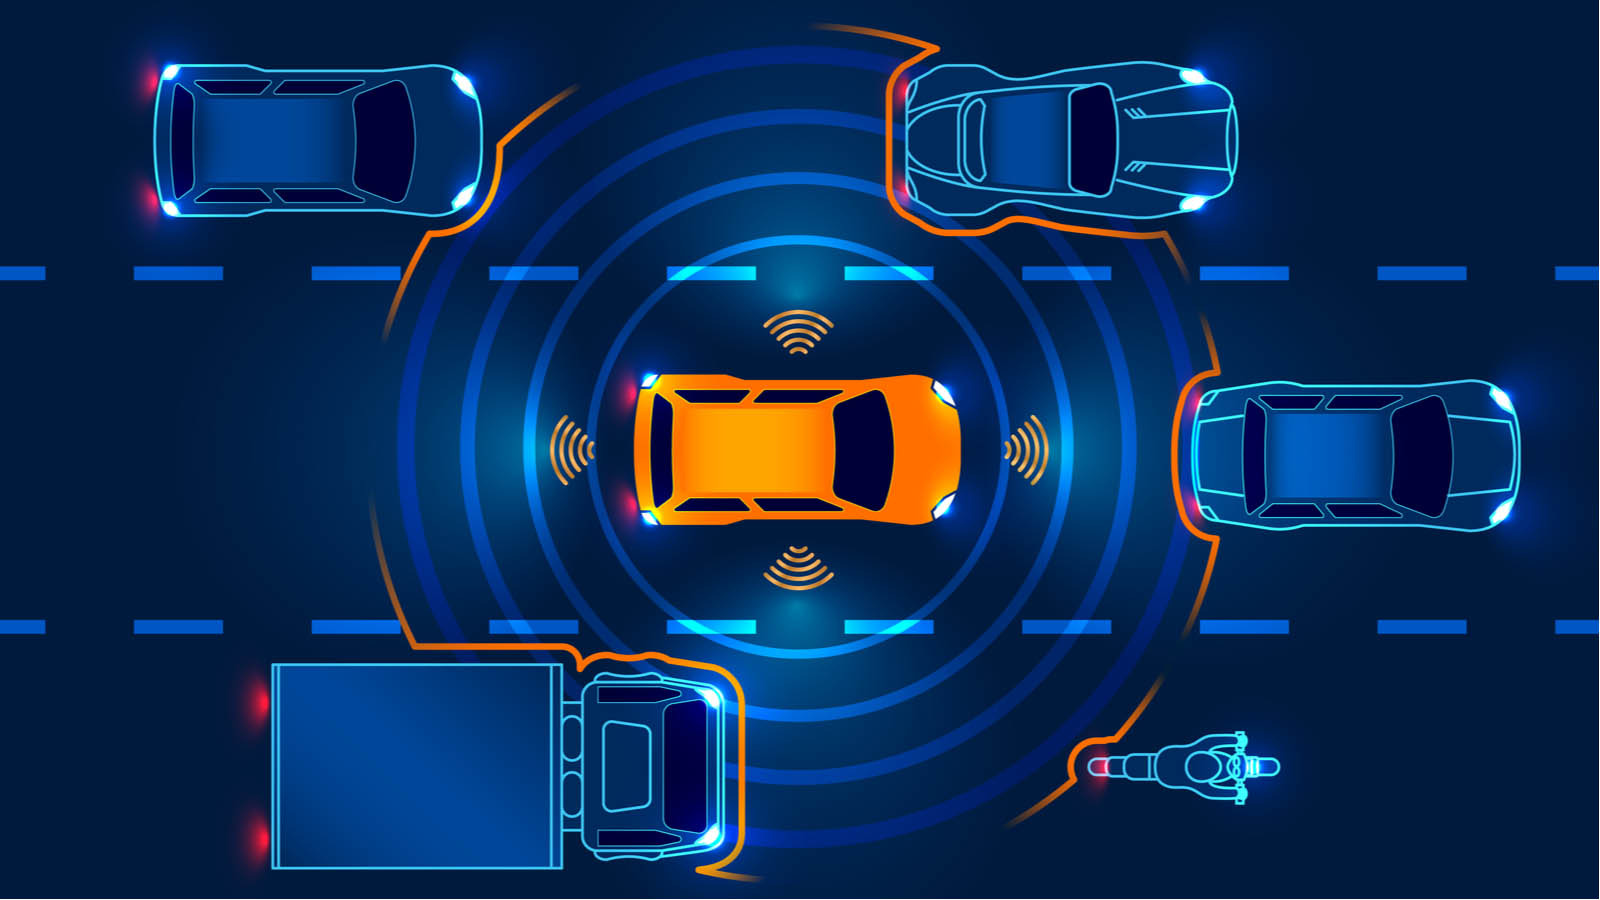 LiDAR sensors show car sensing traffic around it. LAZR